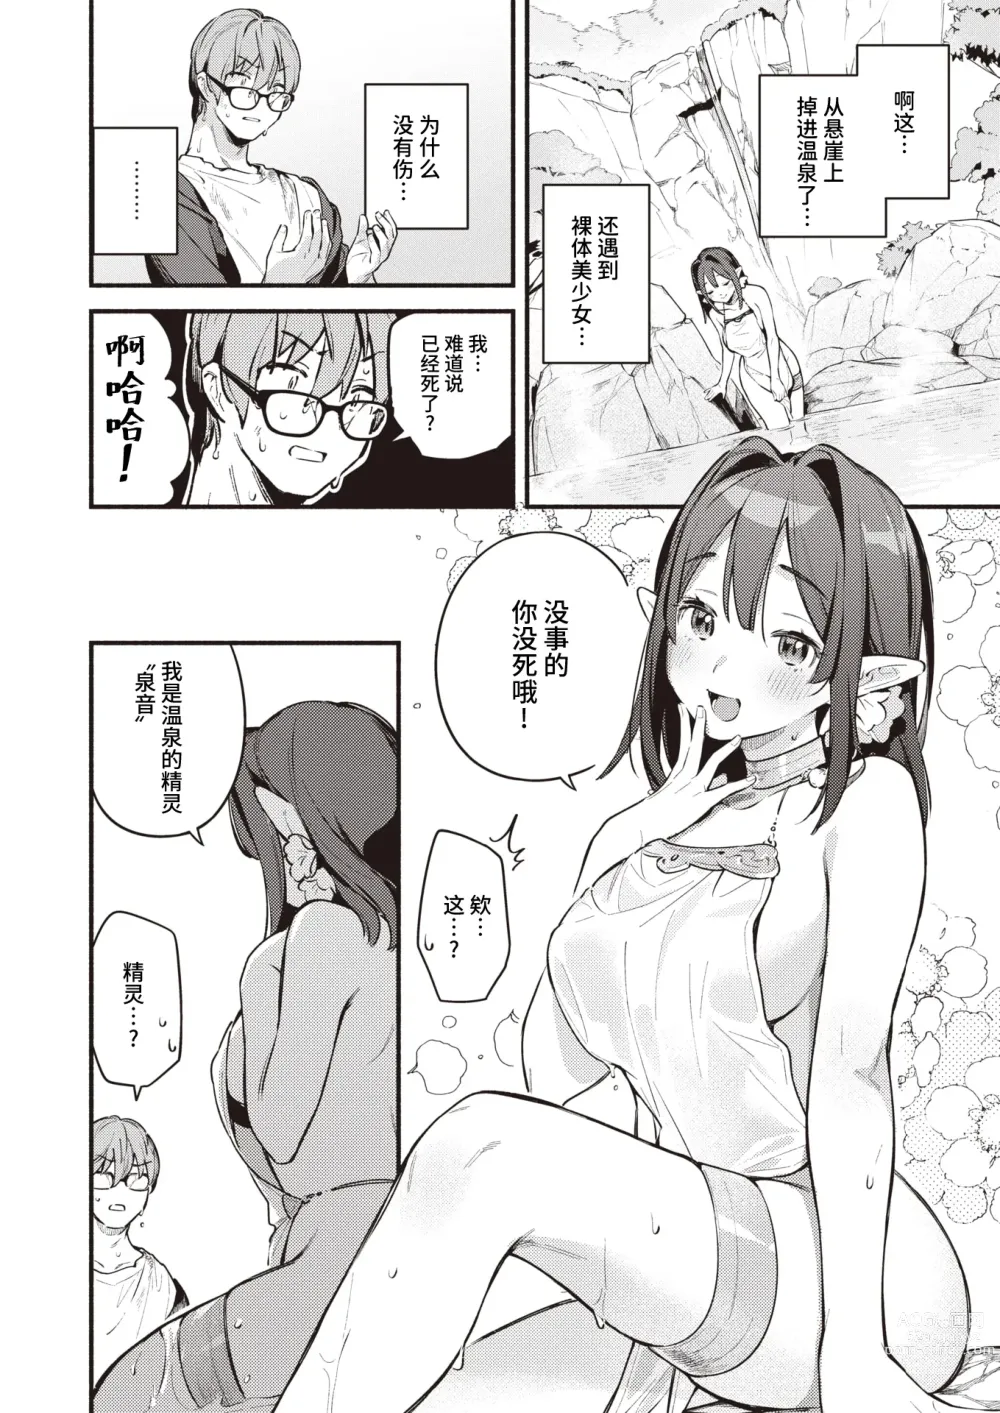 Page 7 of manga Hitou